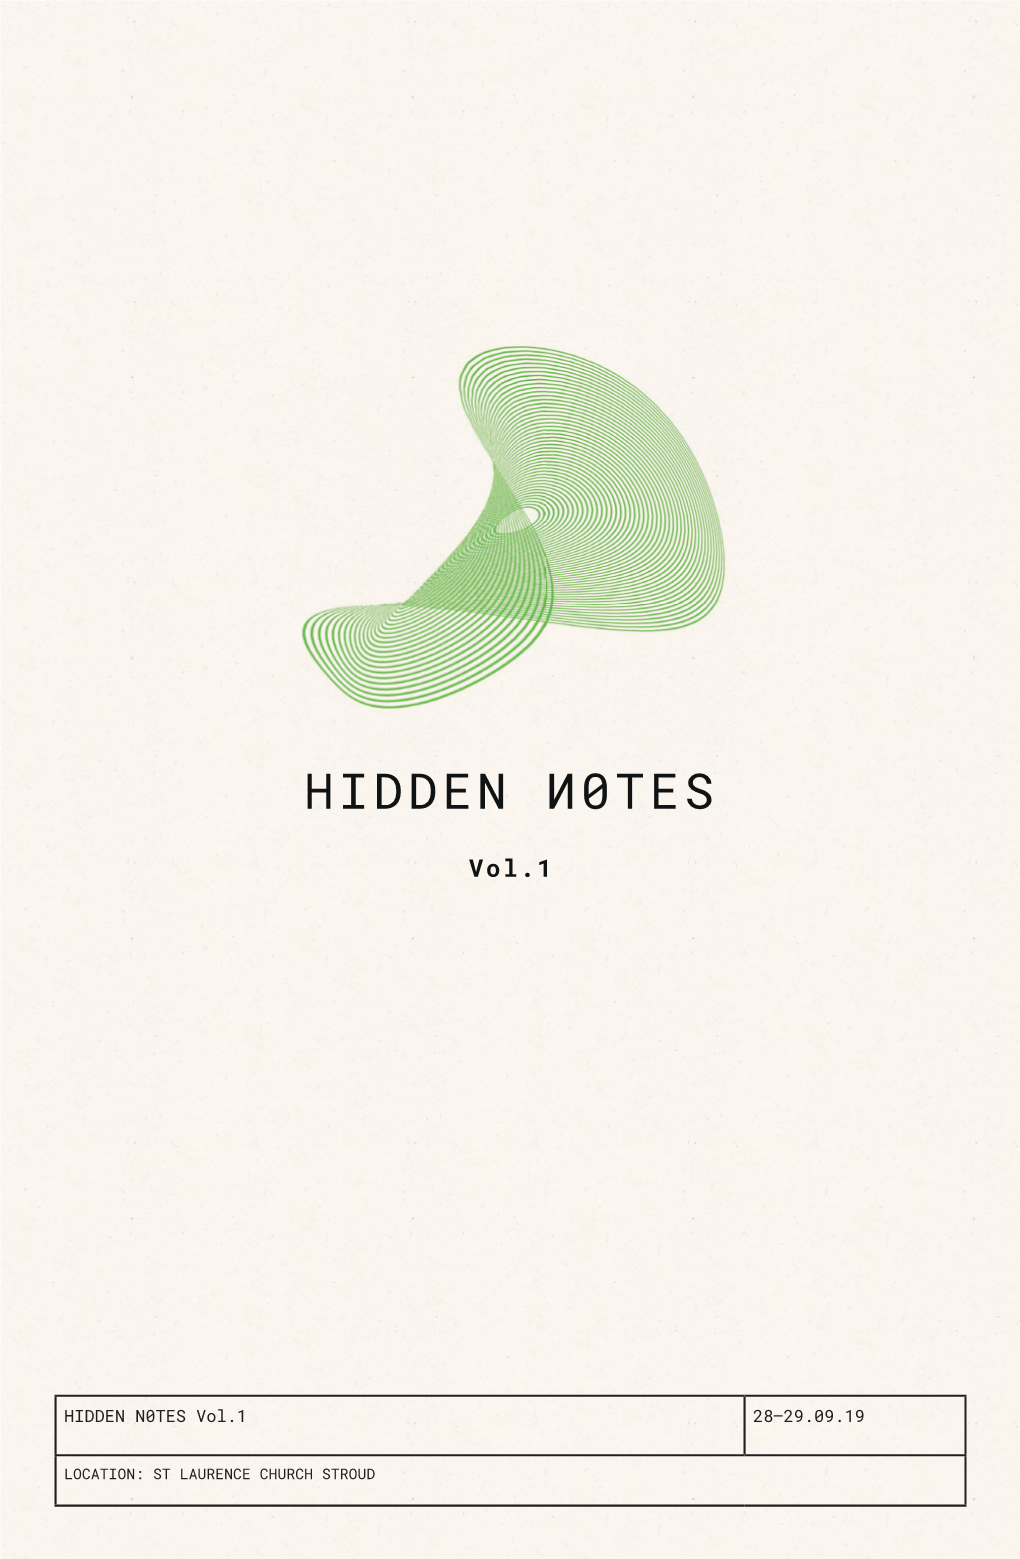 Download Hidden Notes Vol.1 Programme